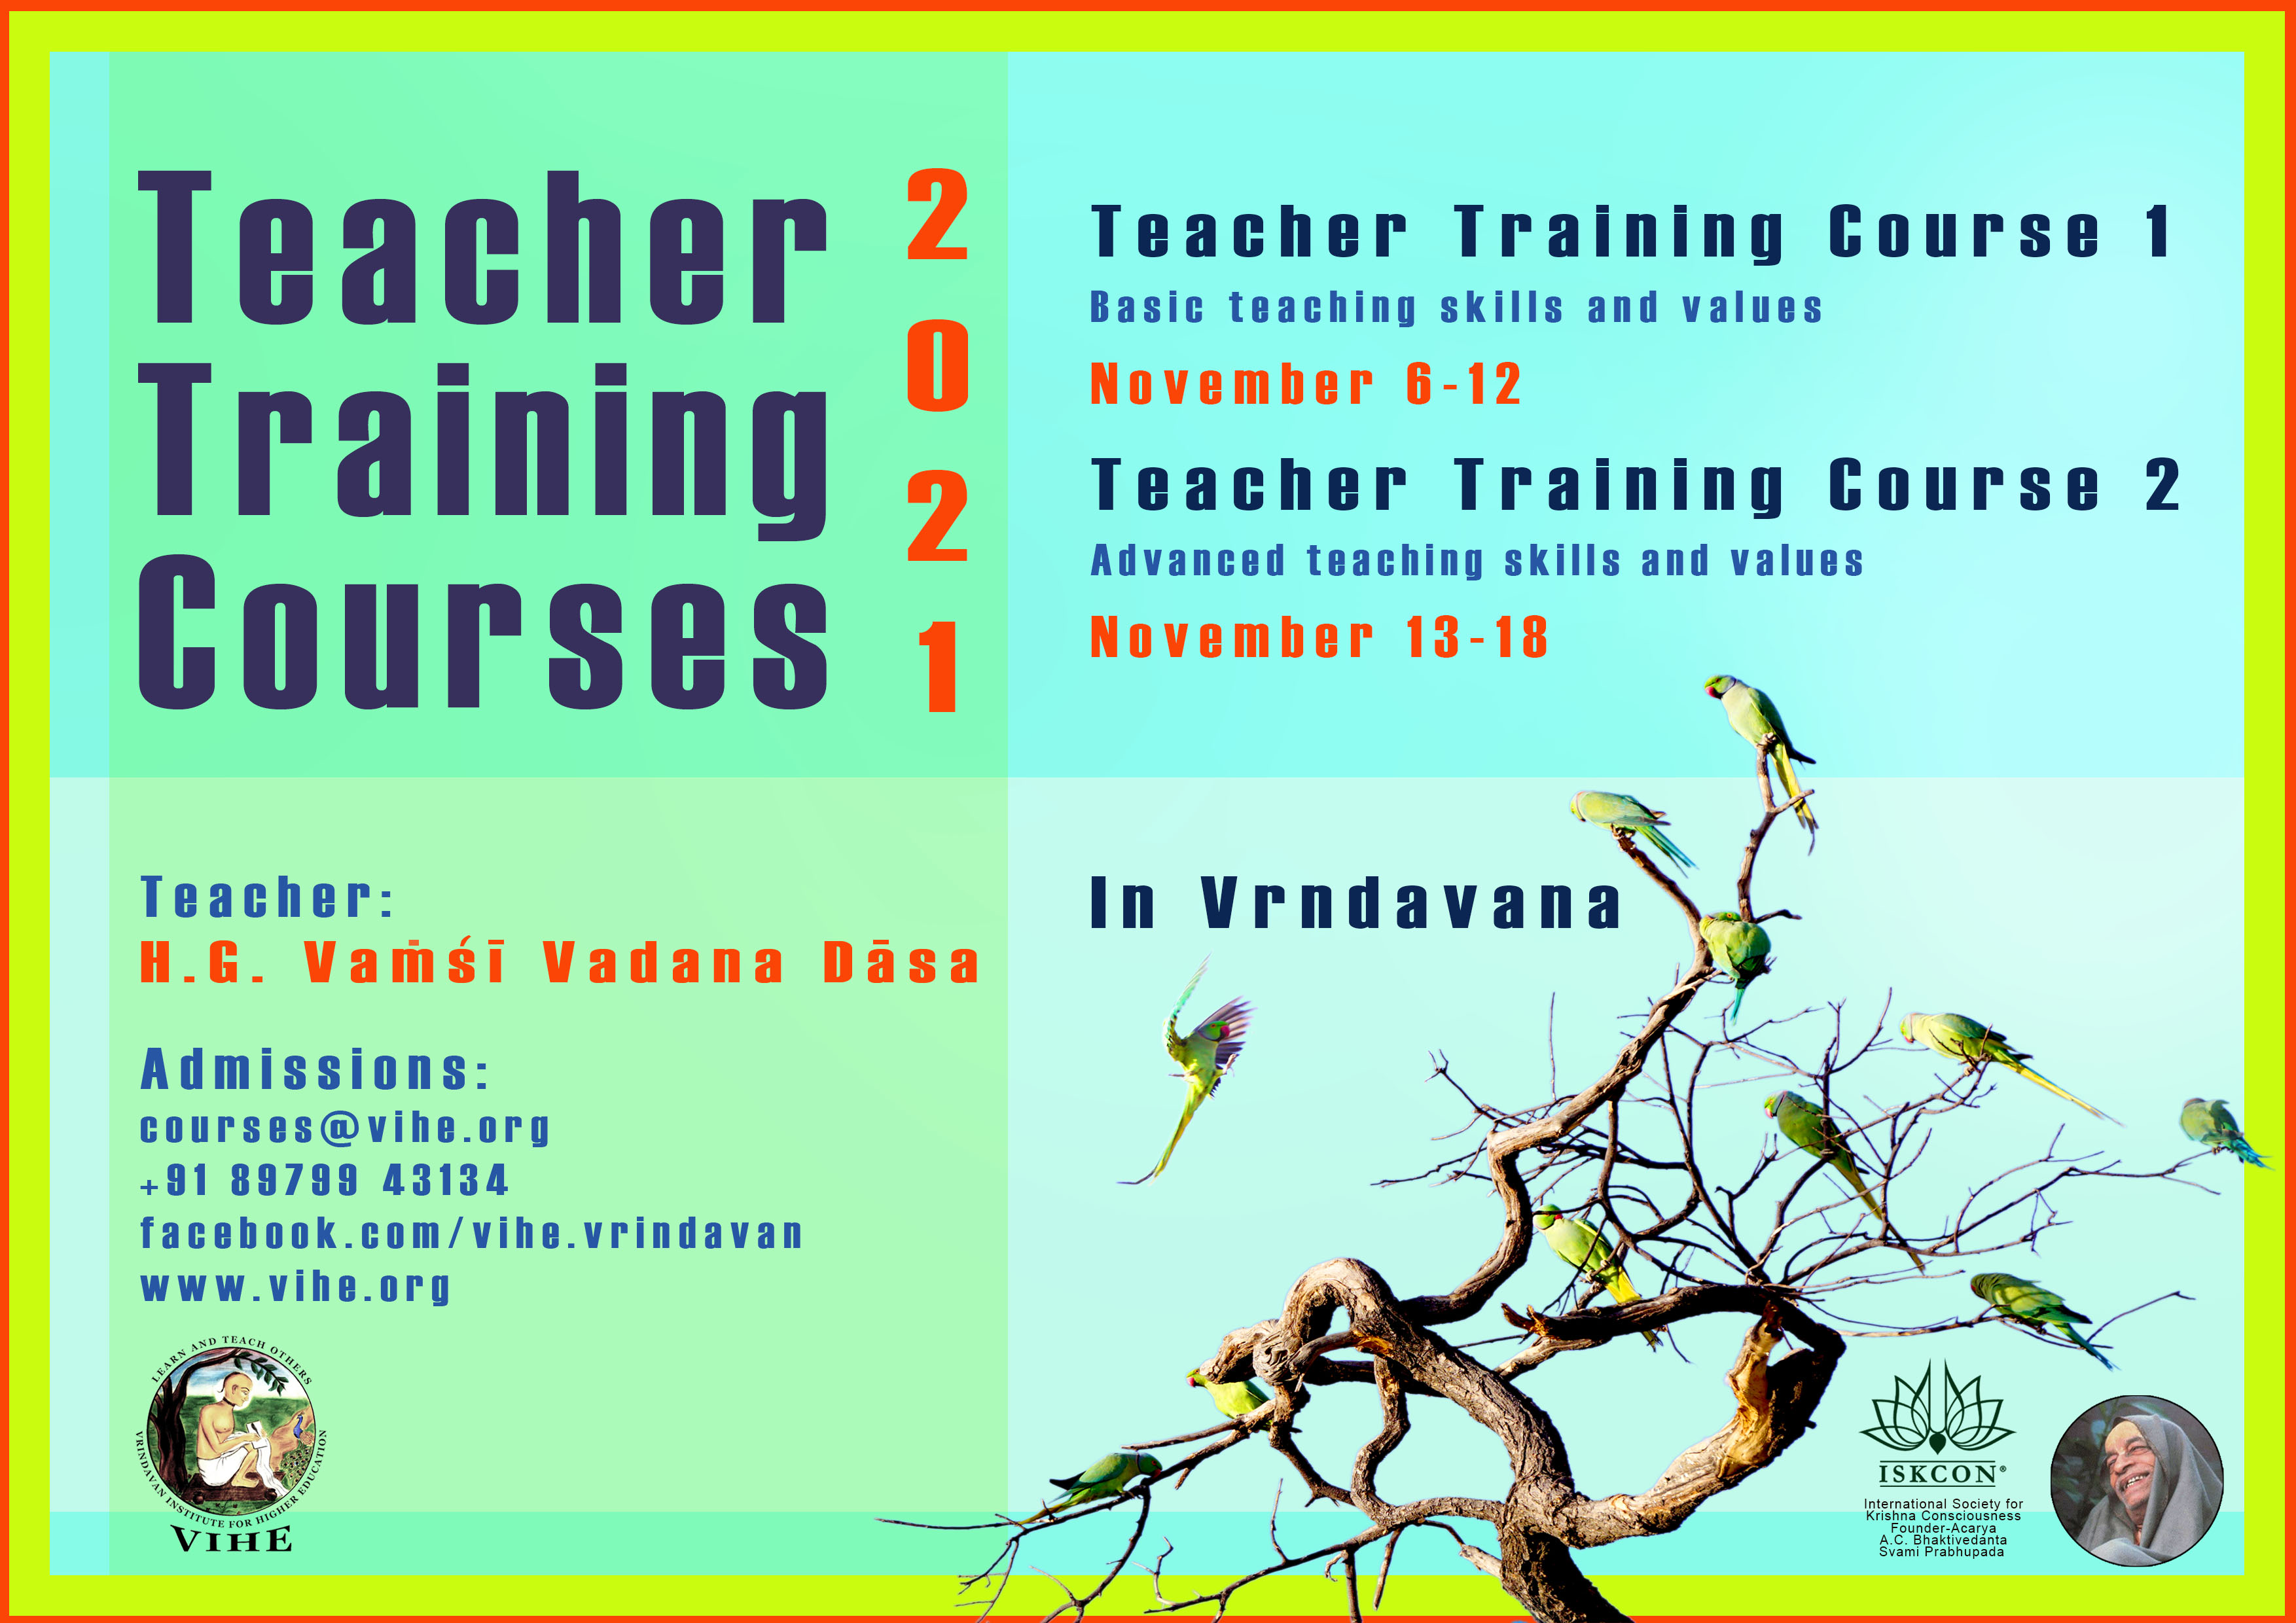 Teacher Training Course 1